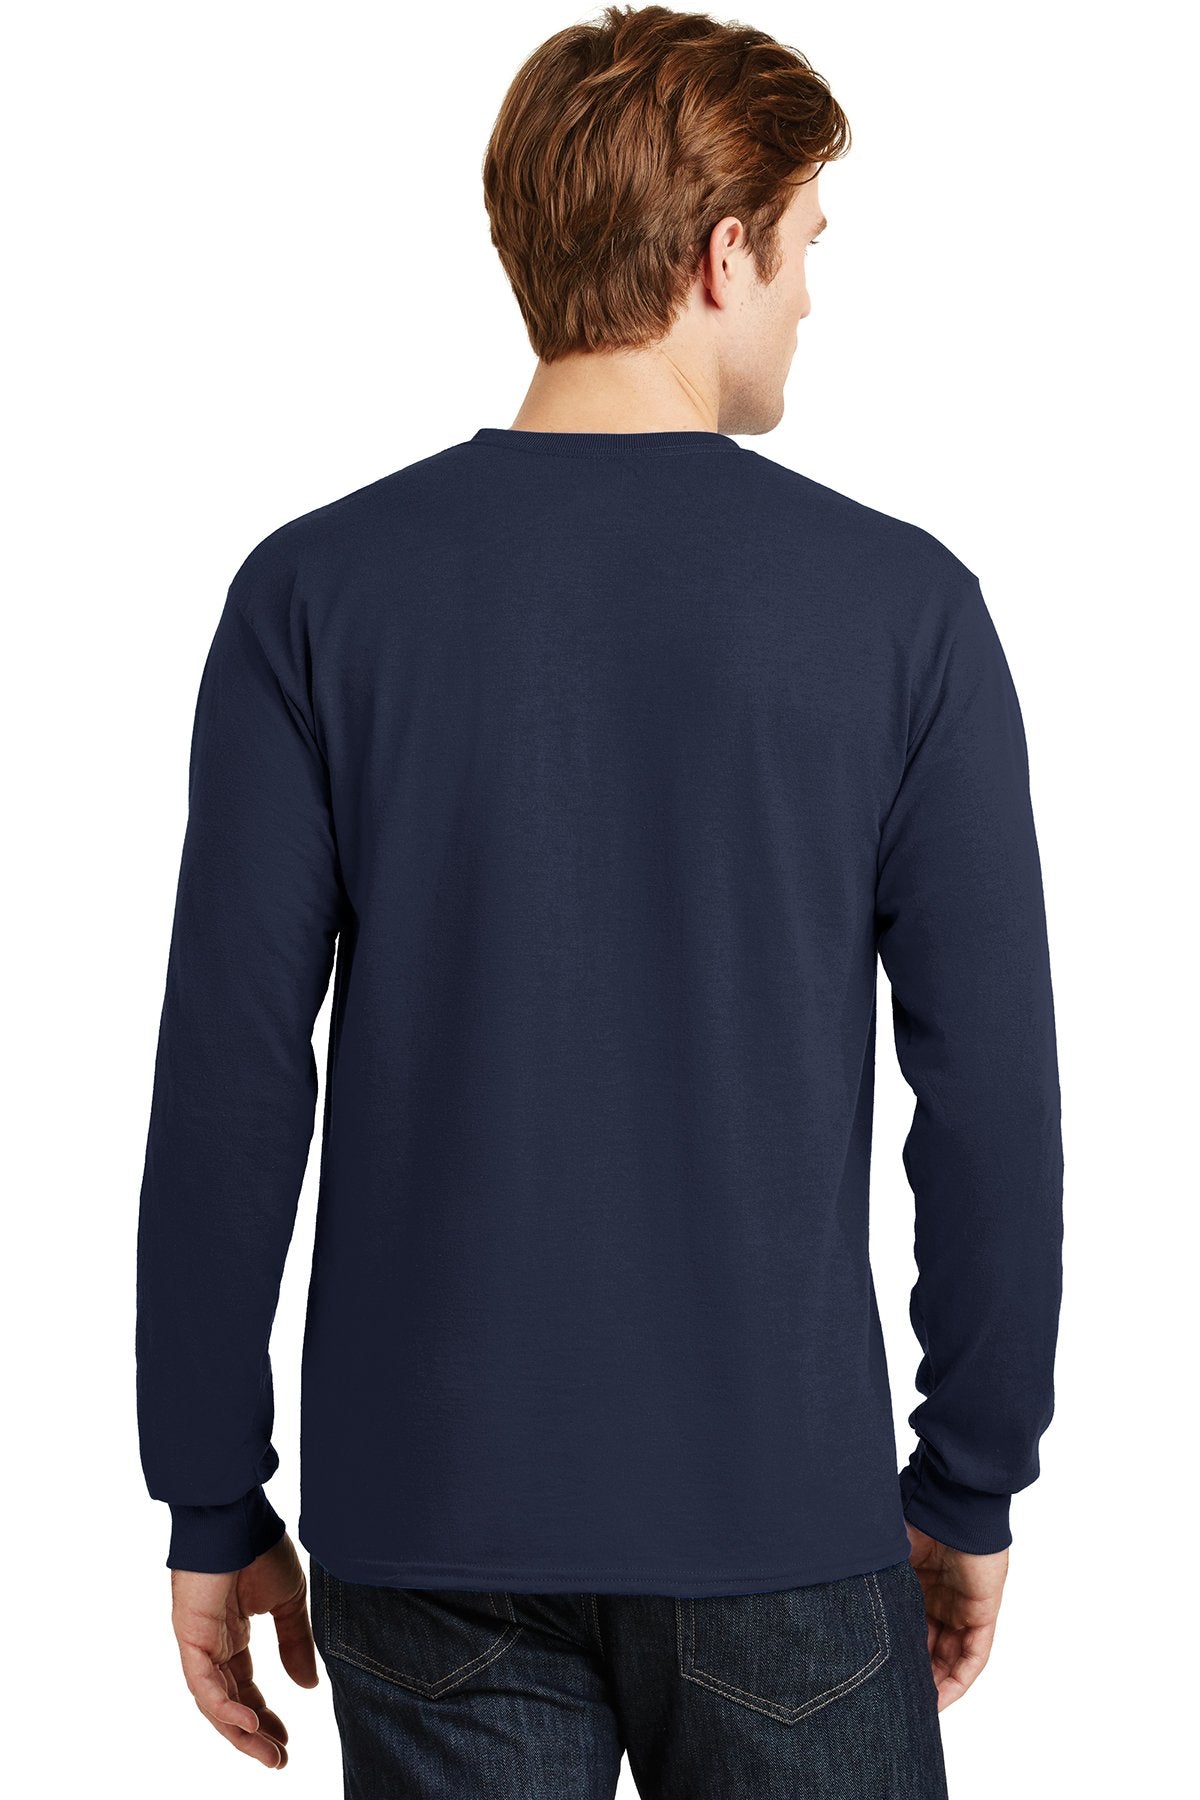 Custom Gildan Dryblend Cotton Poly Long Sleeve T Shirt 8400 Navy – LEAD ...